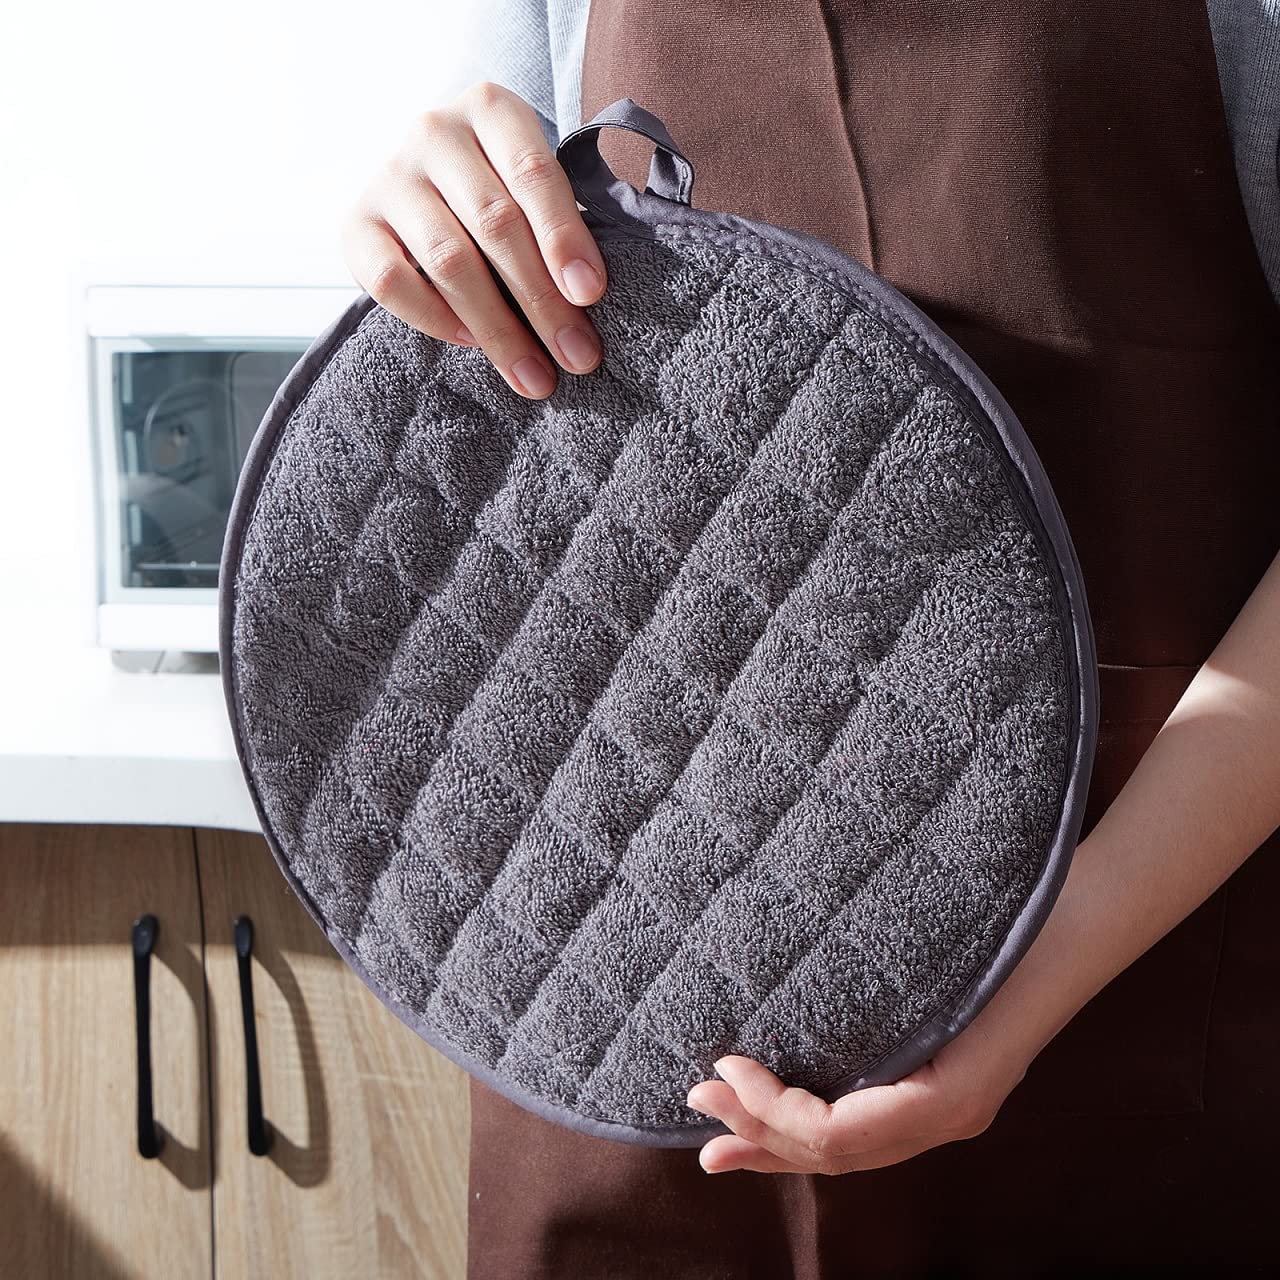 Lifaith ortilla Warmer,Tortilla Server,Pancake Keeper,Size 12” High Density Fabric Keep Warm,Bag to Keep Food Warm (Dark Grey) …